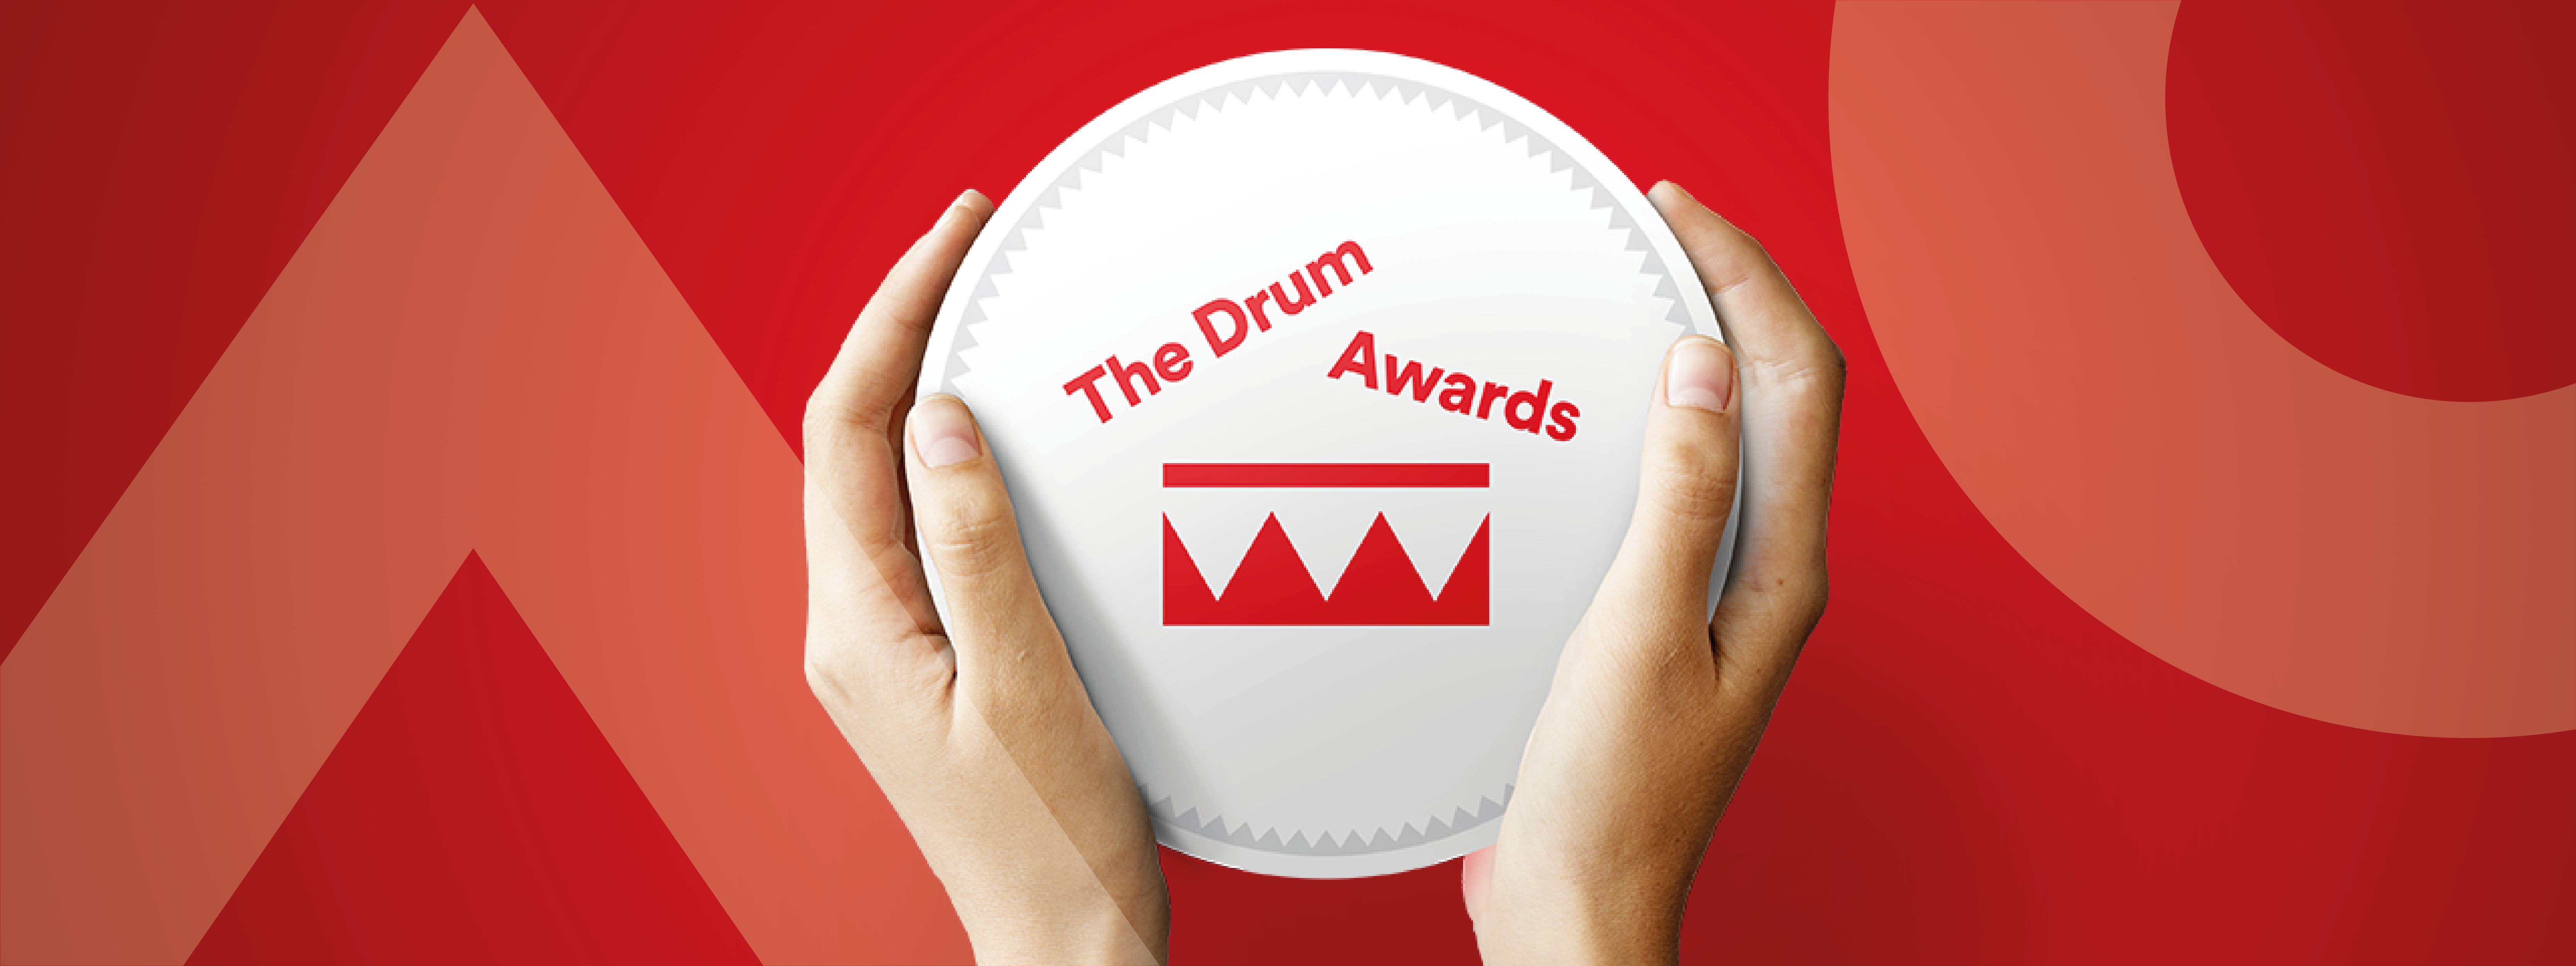 OMG Marketplace won Best Buy Side Innovation at The Drum Digital Advertising Awards